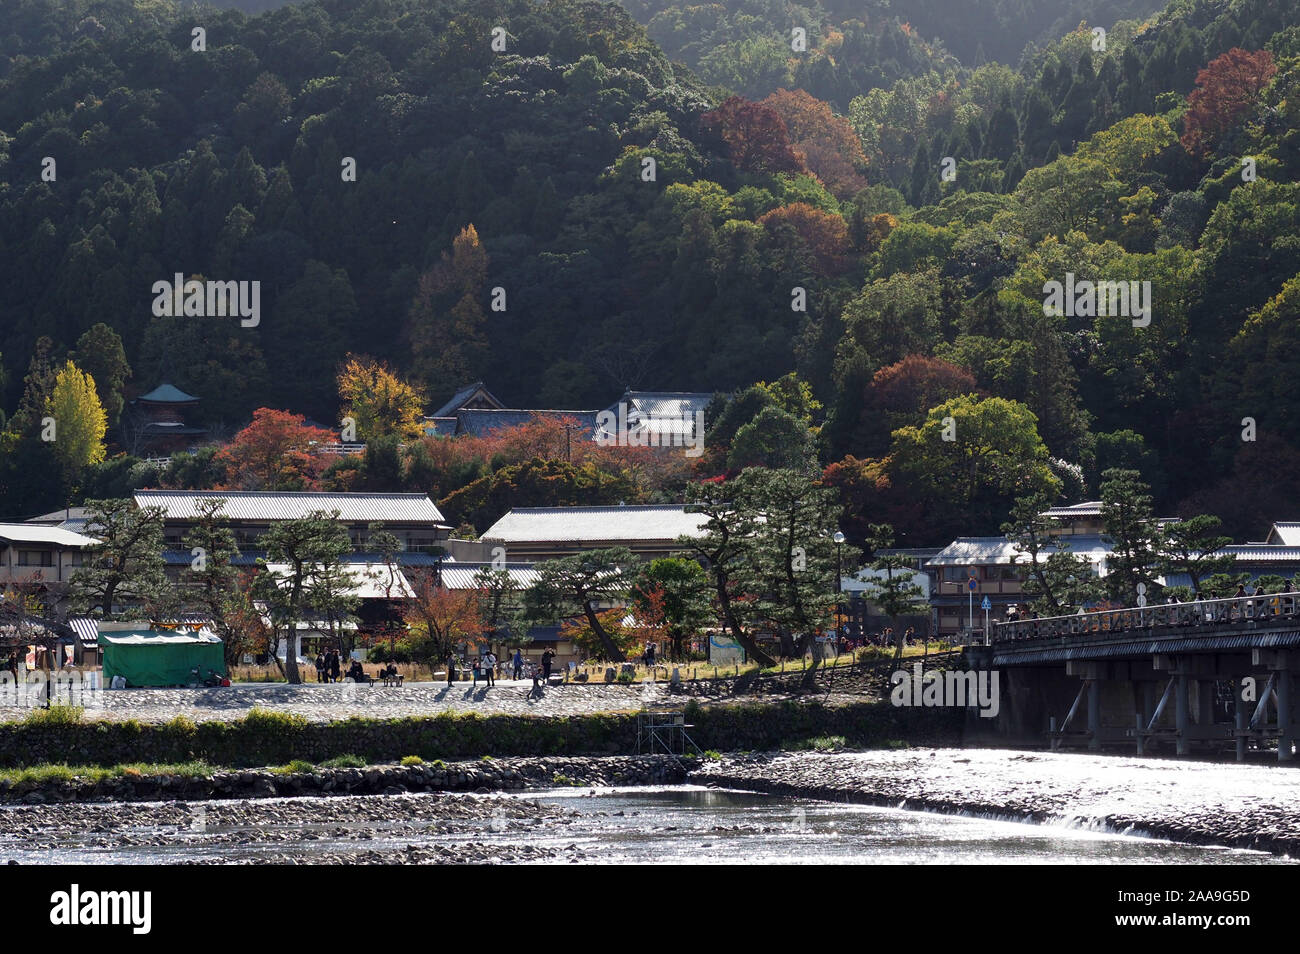 Fall foliage and colors across from the Togetsu-kyo Bridge in Arashiyama, Kyoto, Japan. Stock Photo